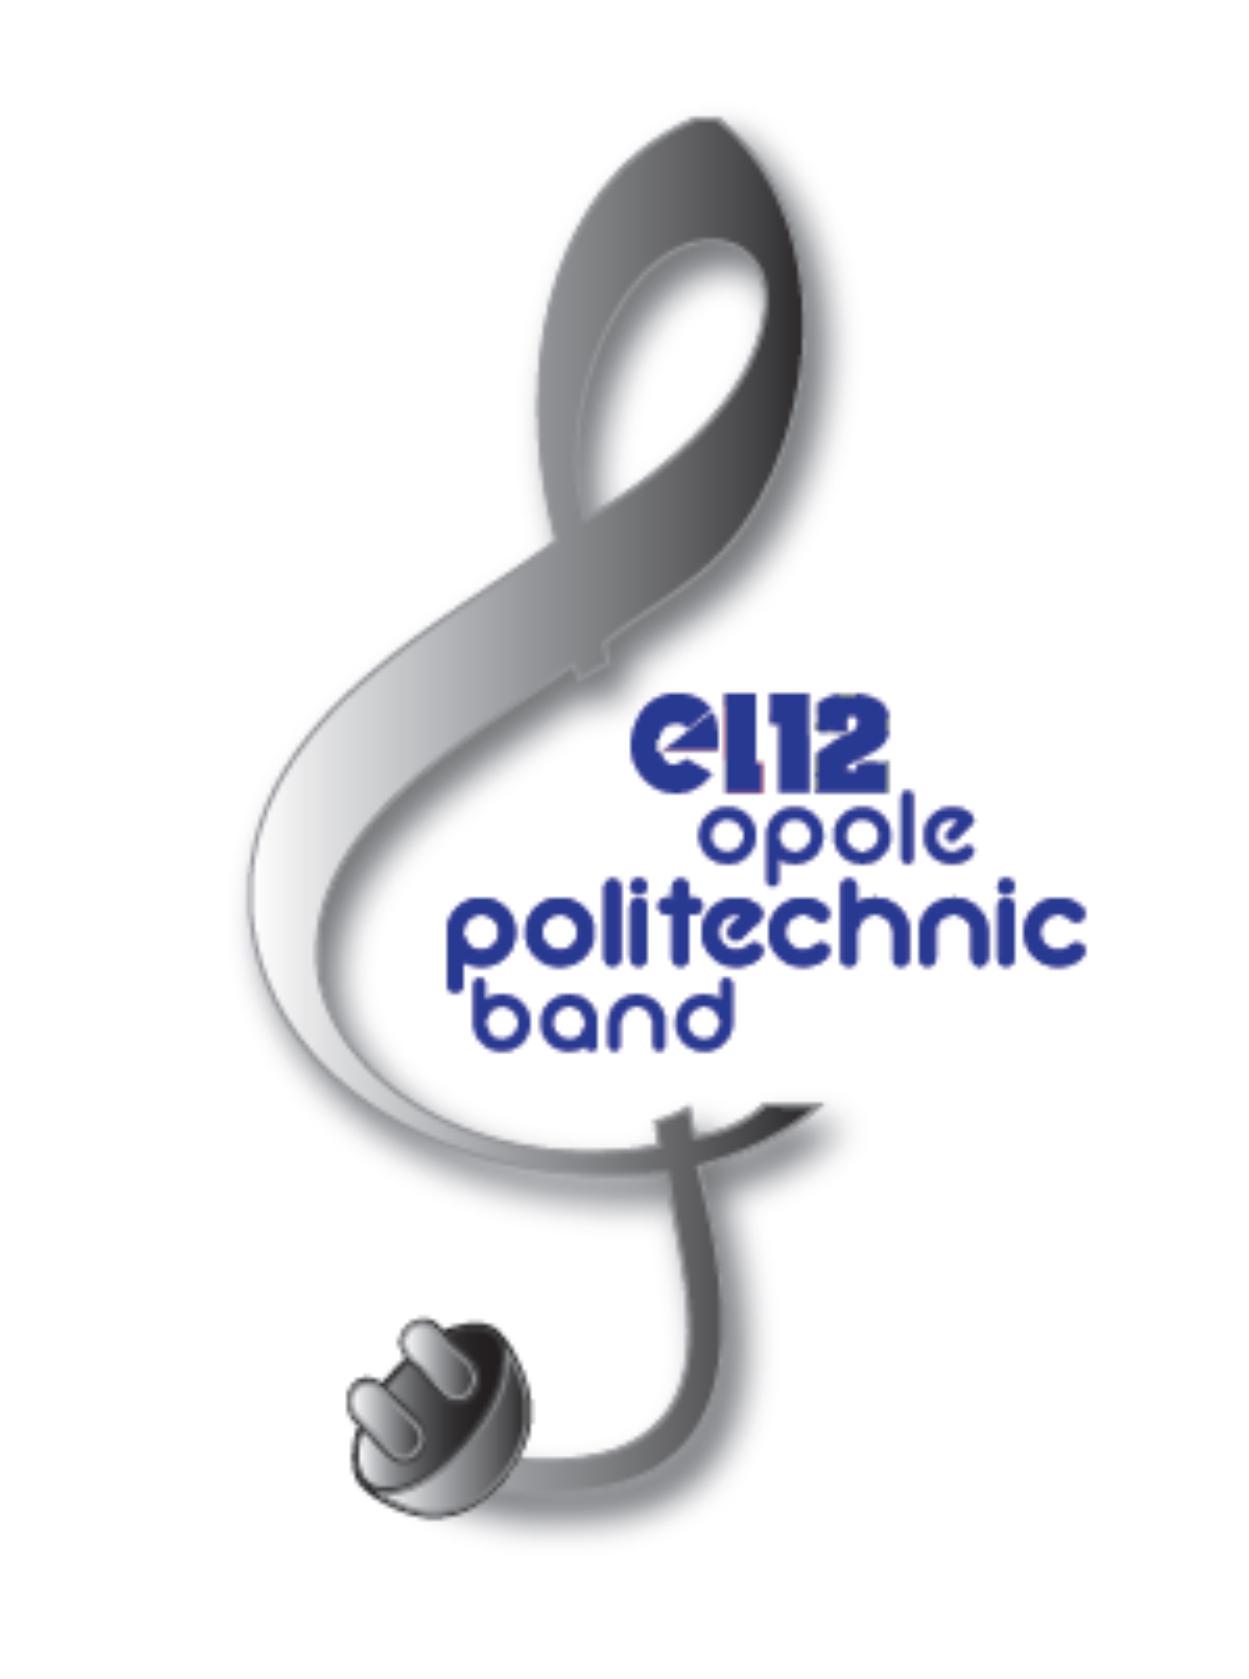 el12 Opole Politechnic Band